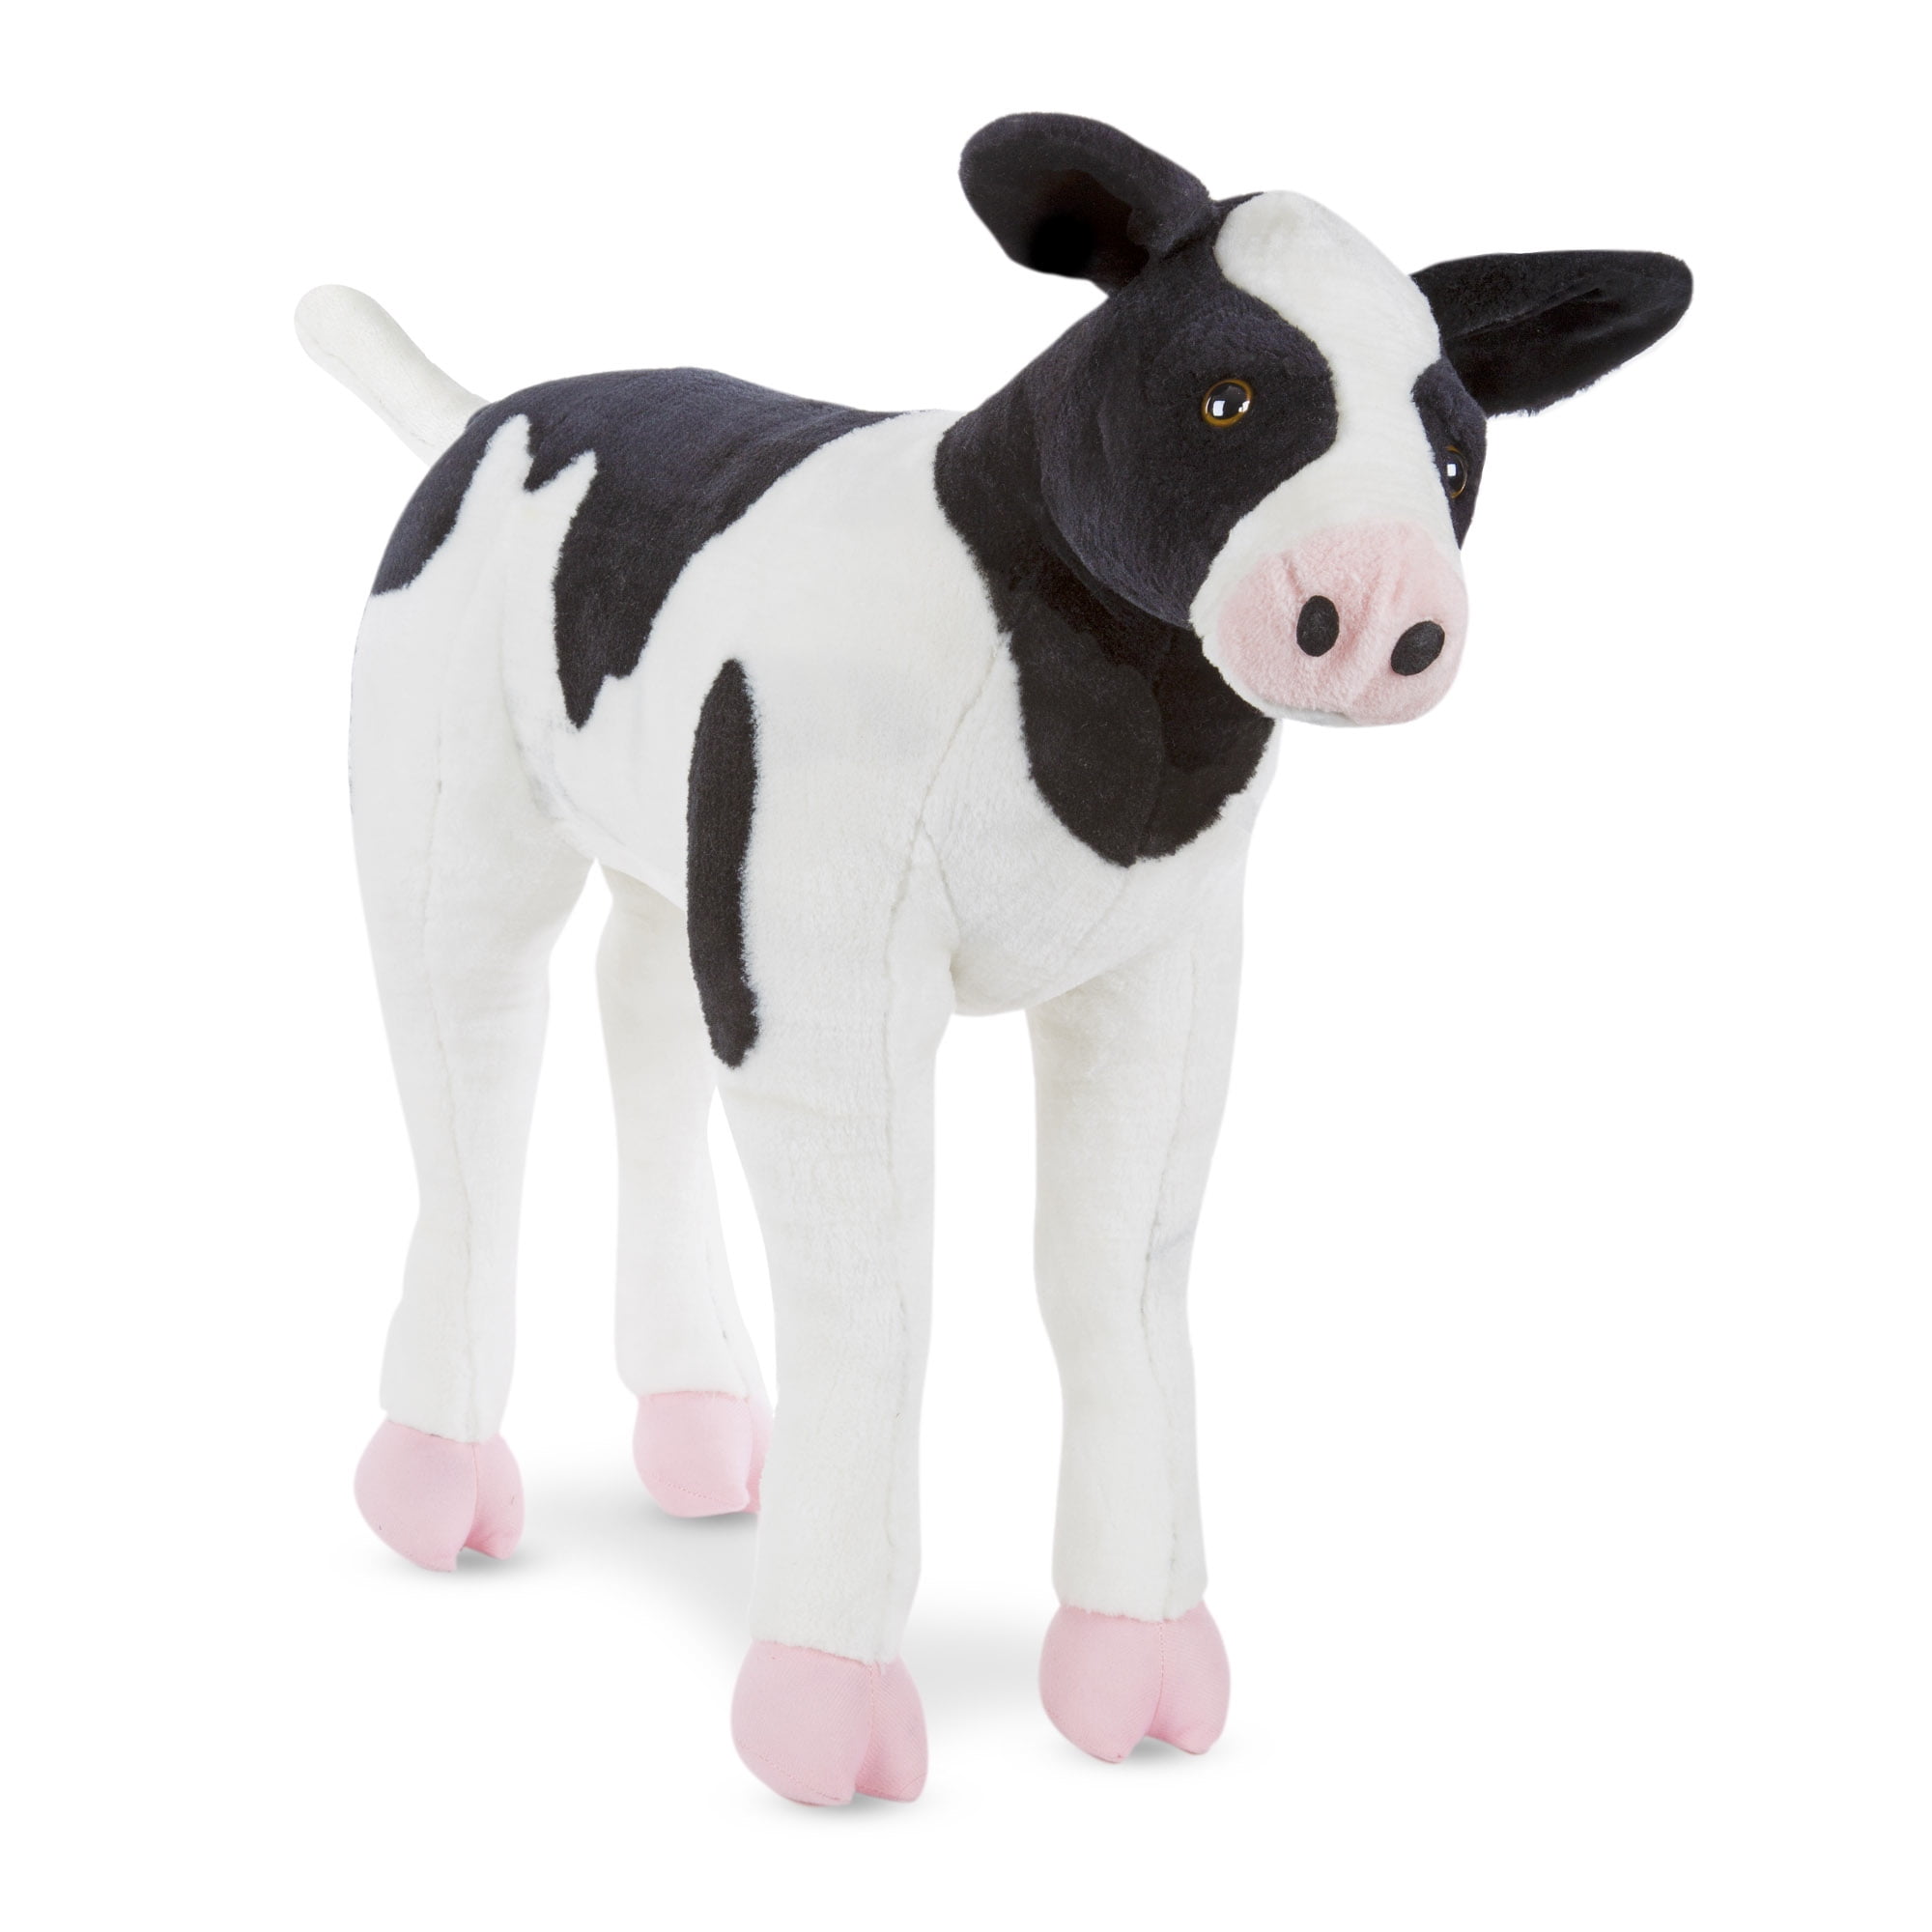 Douglas Plush Stuffed Farm Animal Sweet Cream Calf Cow 9i Cuddle Toy Black White for sale online 